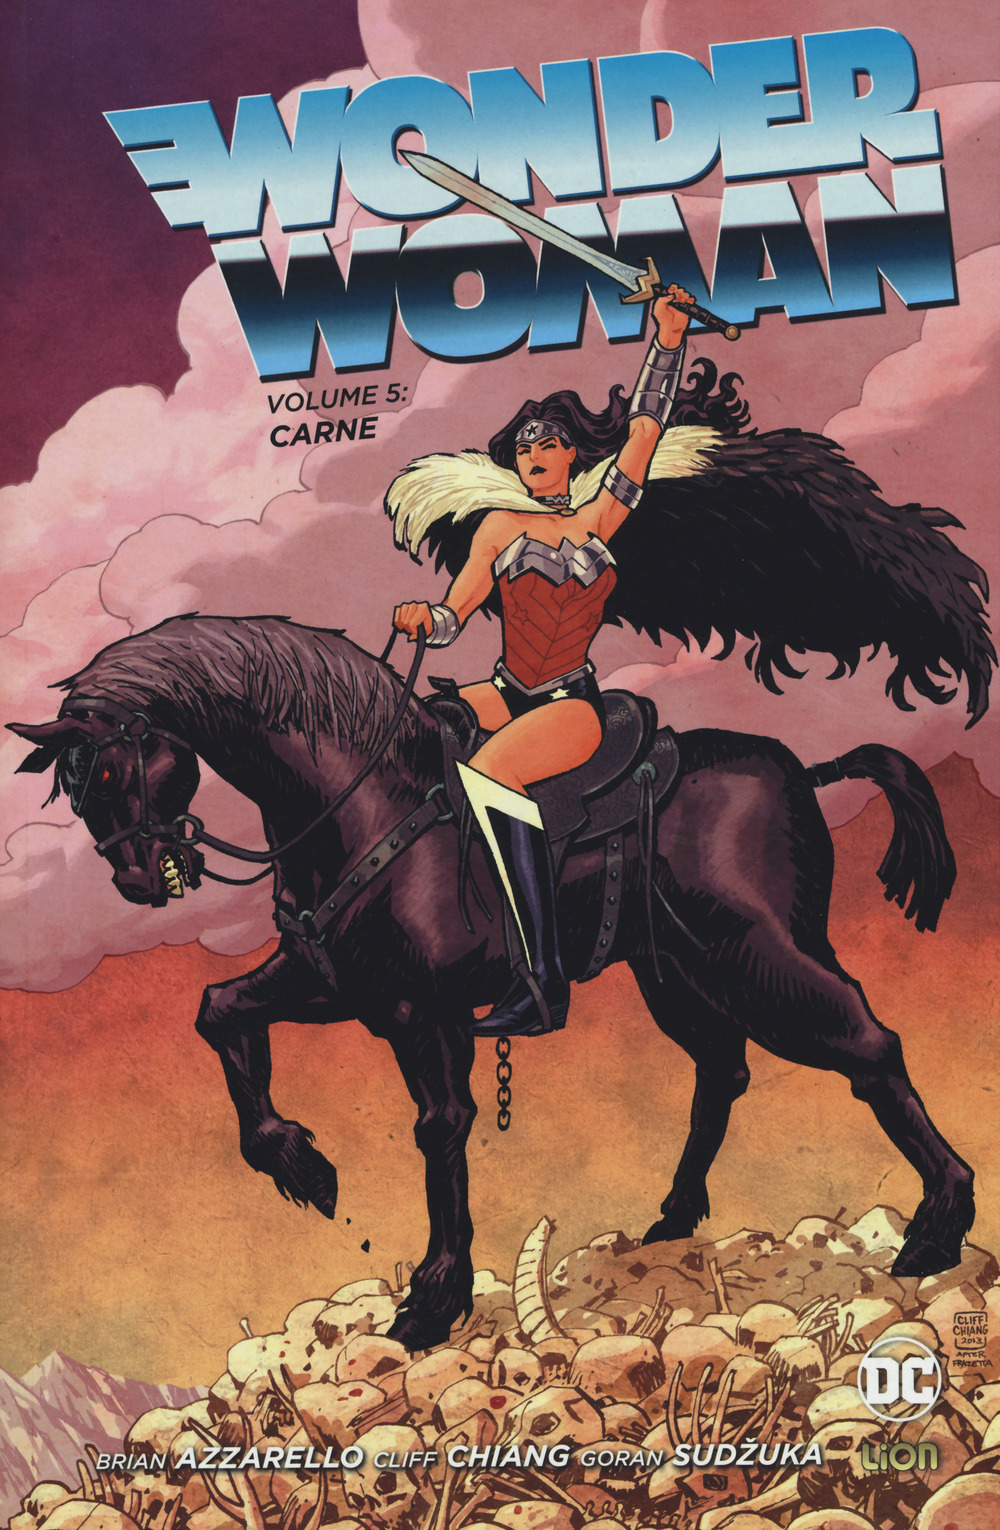 Wonder Woman. Vol. 5: Carne